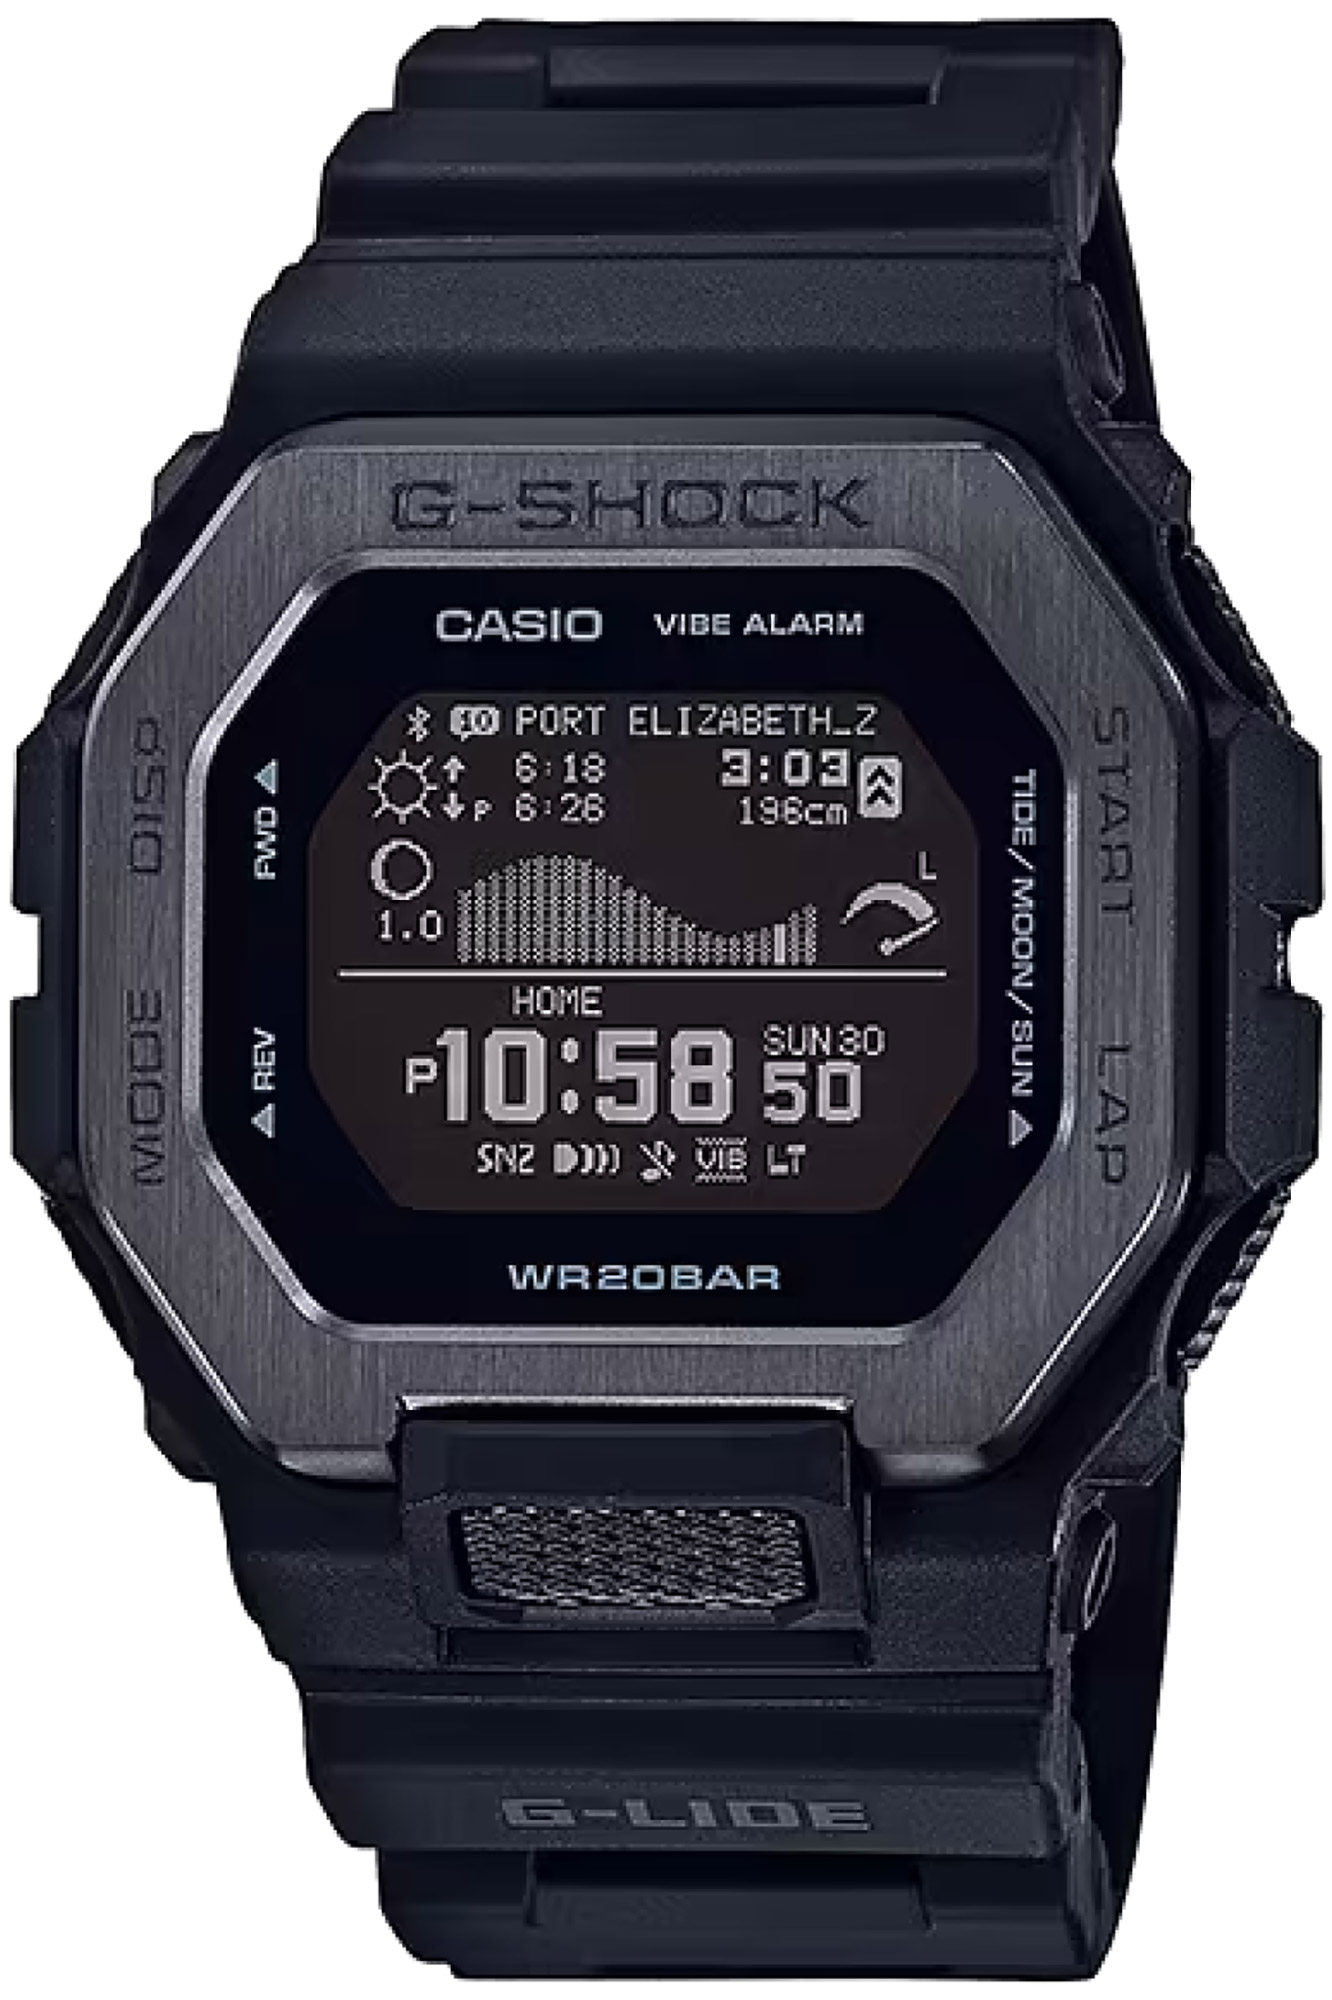 Watch CASIO G-Shock gbx-100ns-1er